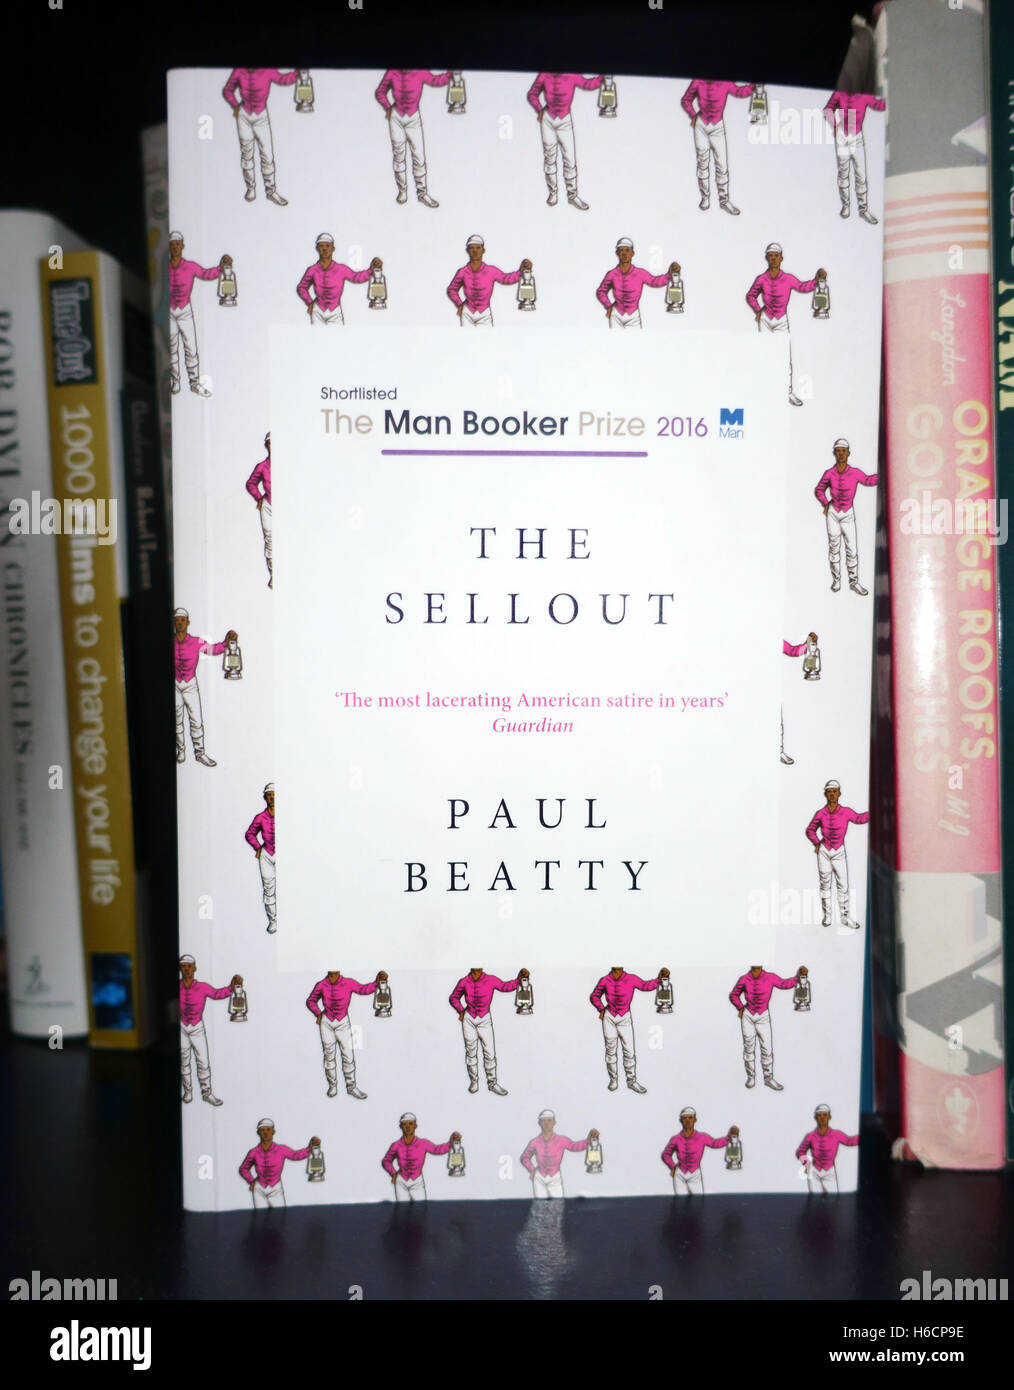 Paul Beatty gewinnt 2016 Booker Prize for Fiction mit "The Sellout", erste US-Autor dazu Stockfoto